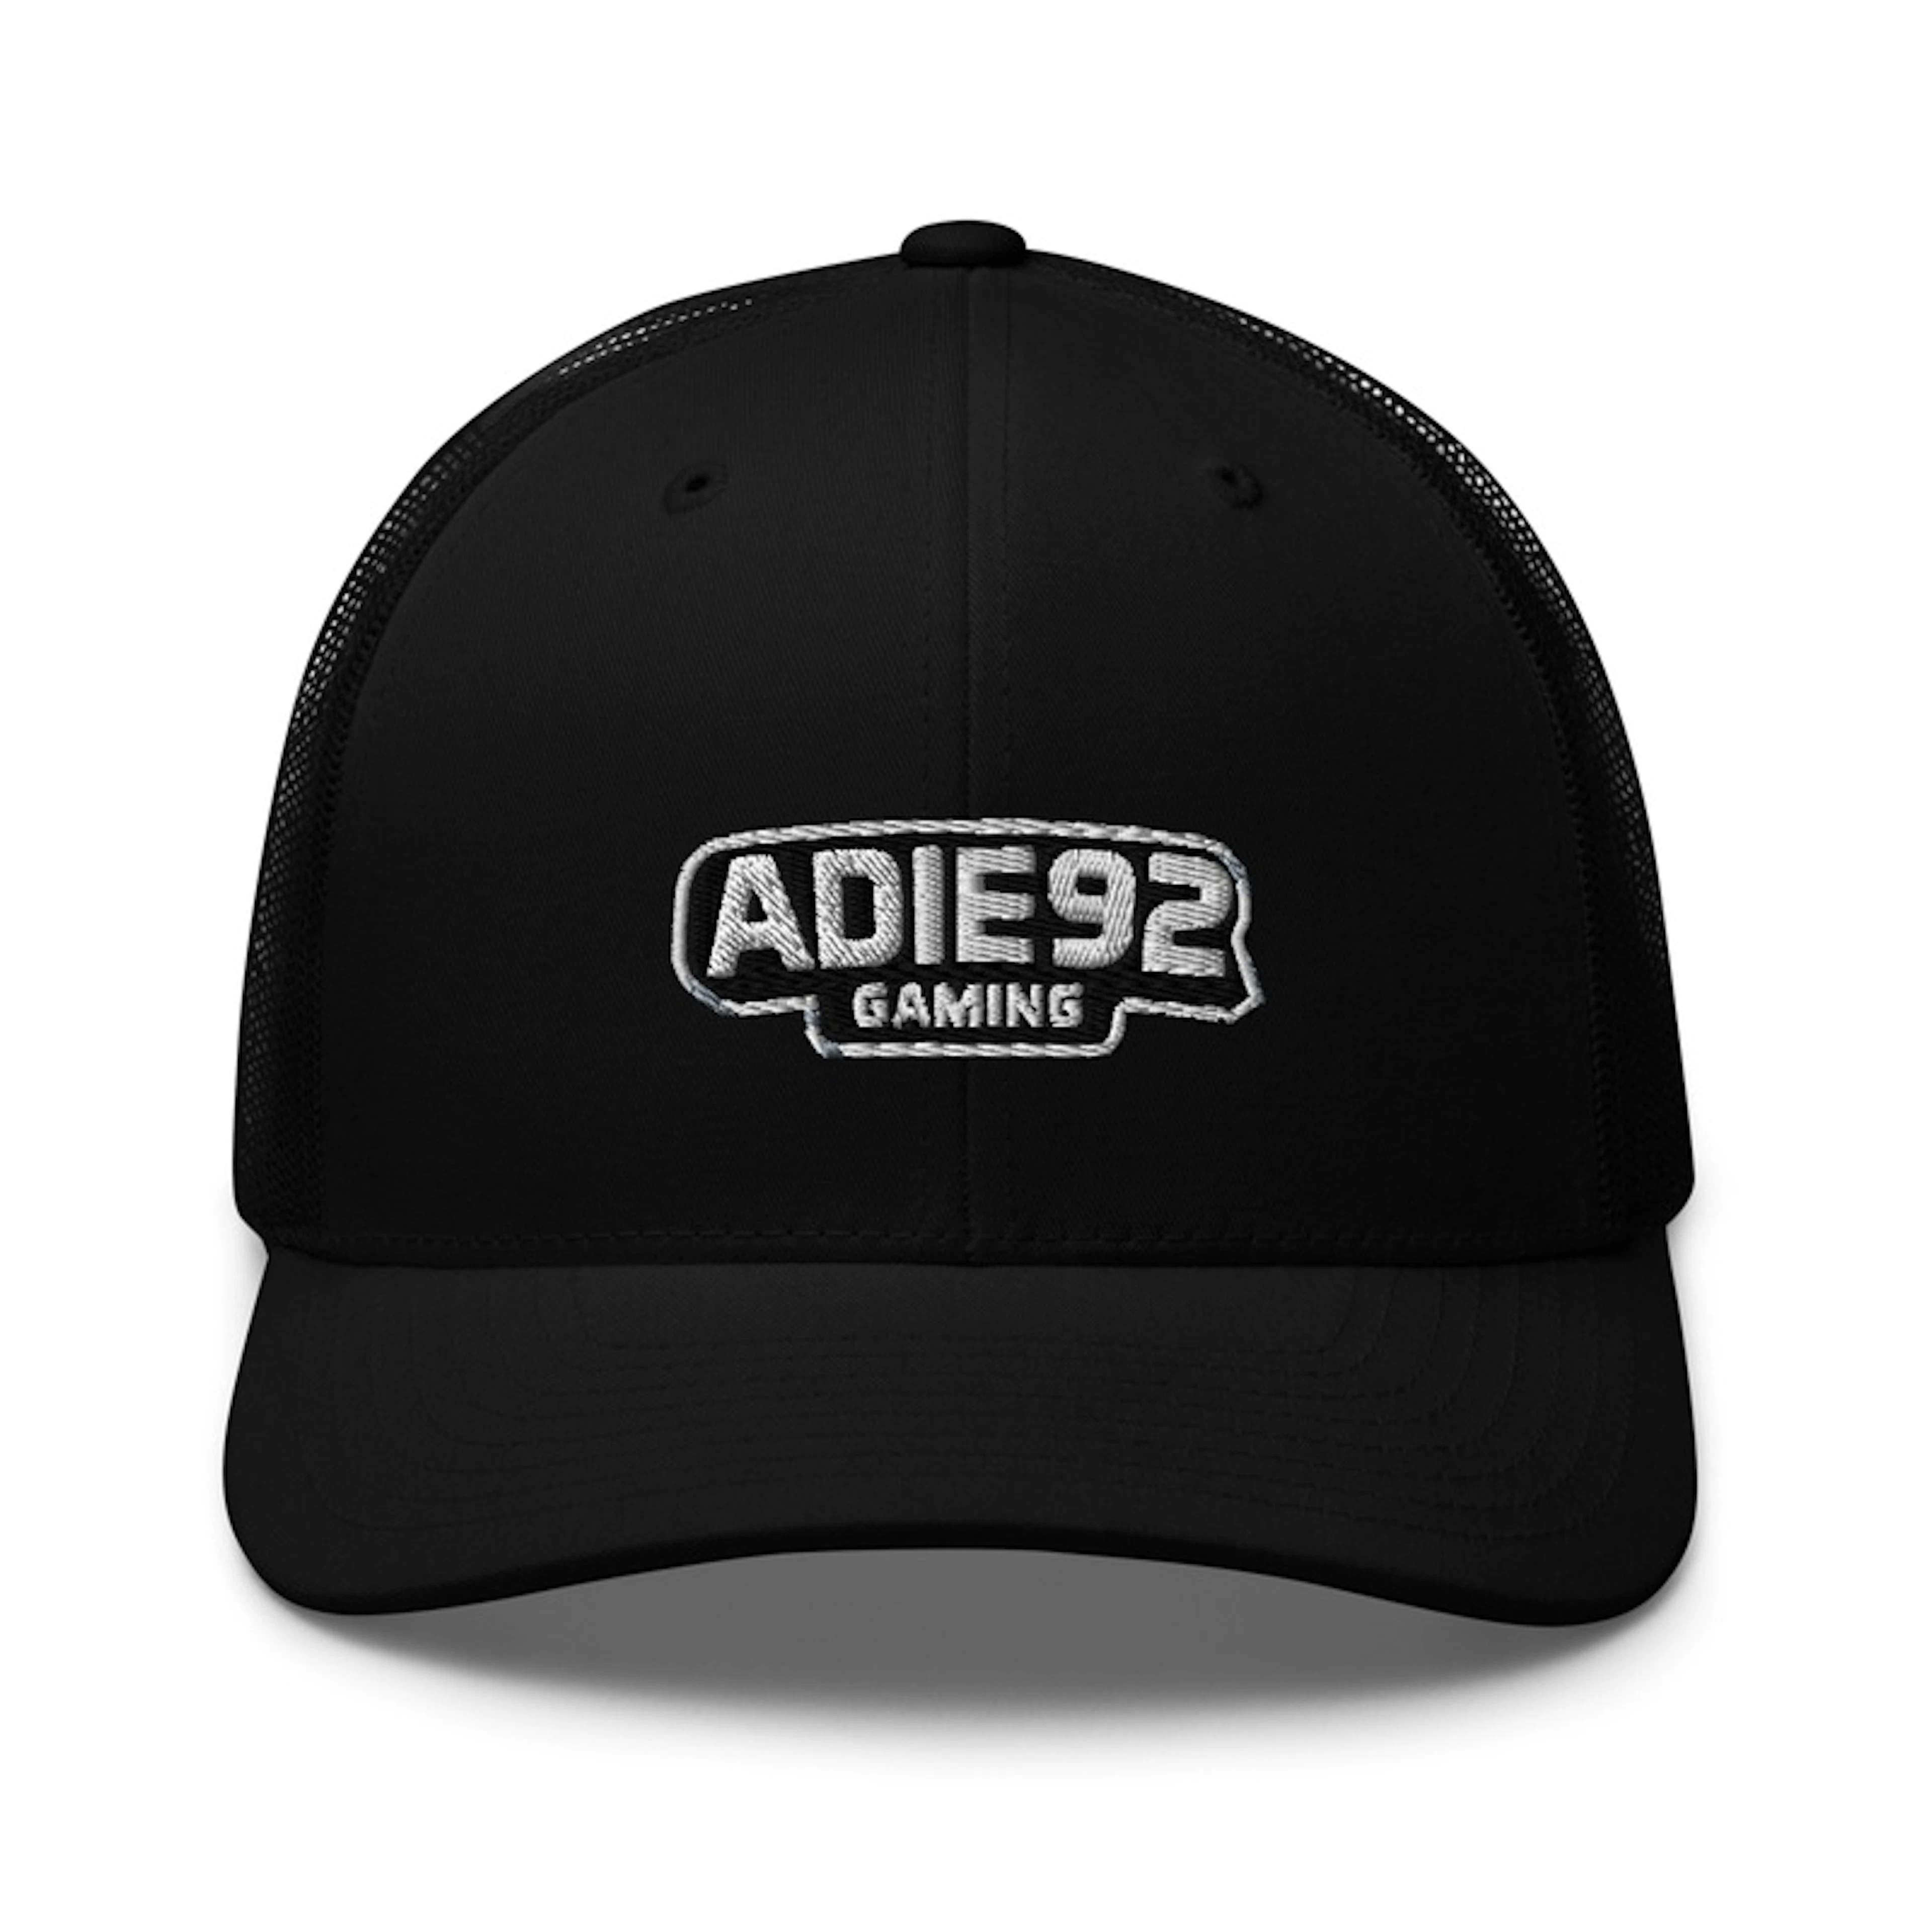 Adie92 Trucker Cap